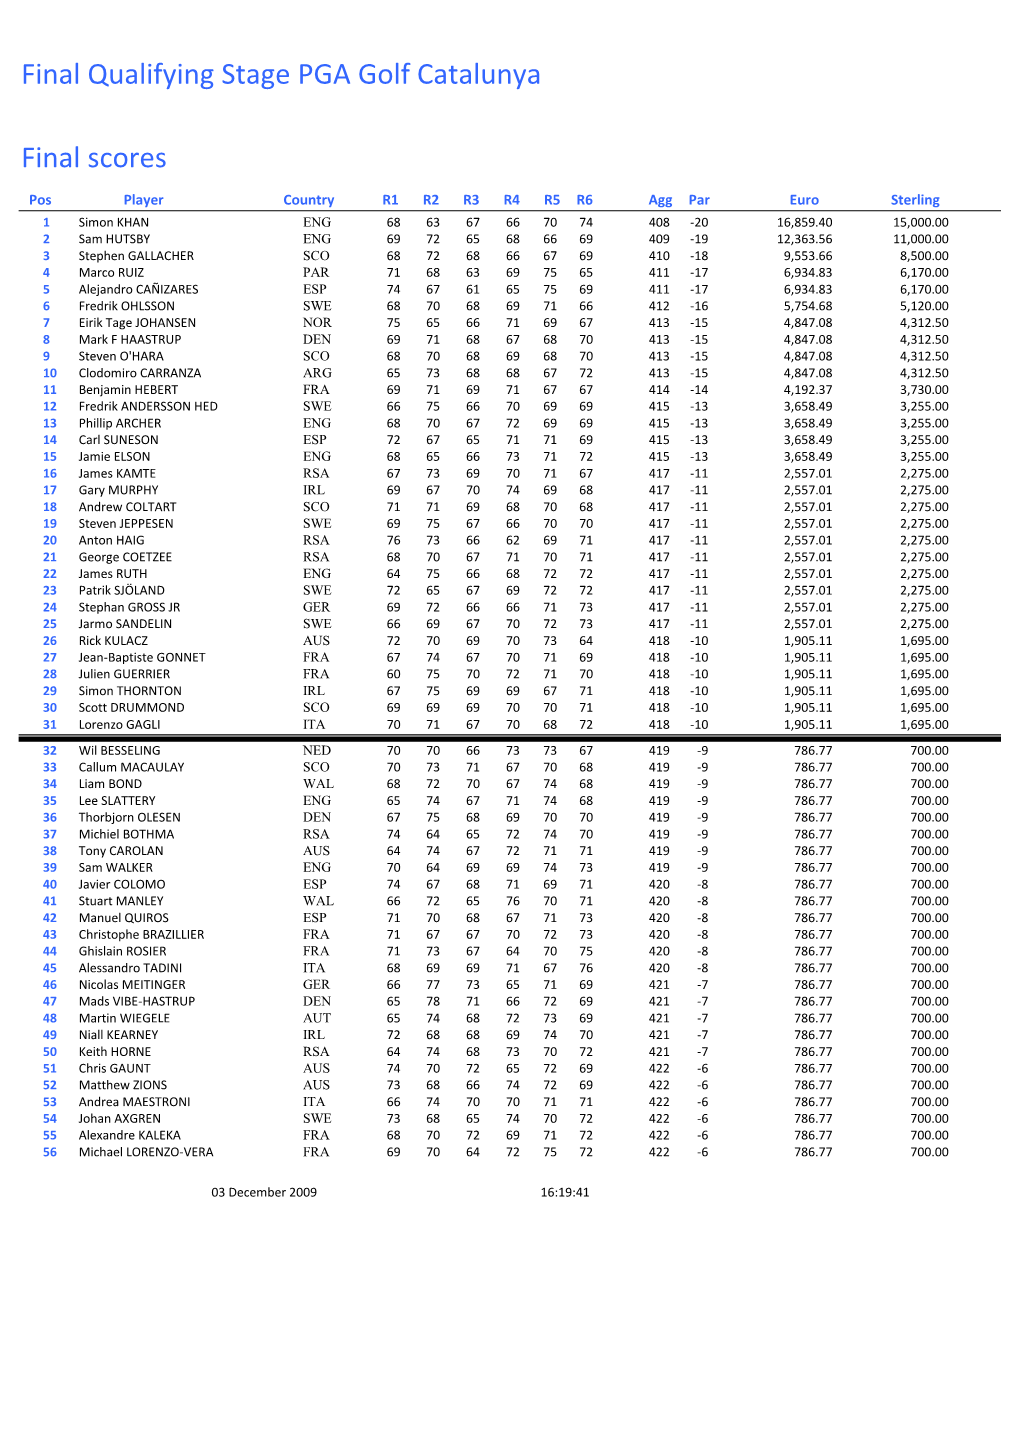 Final Qualifying Stage PGA Golf Catalunya Final Scores